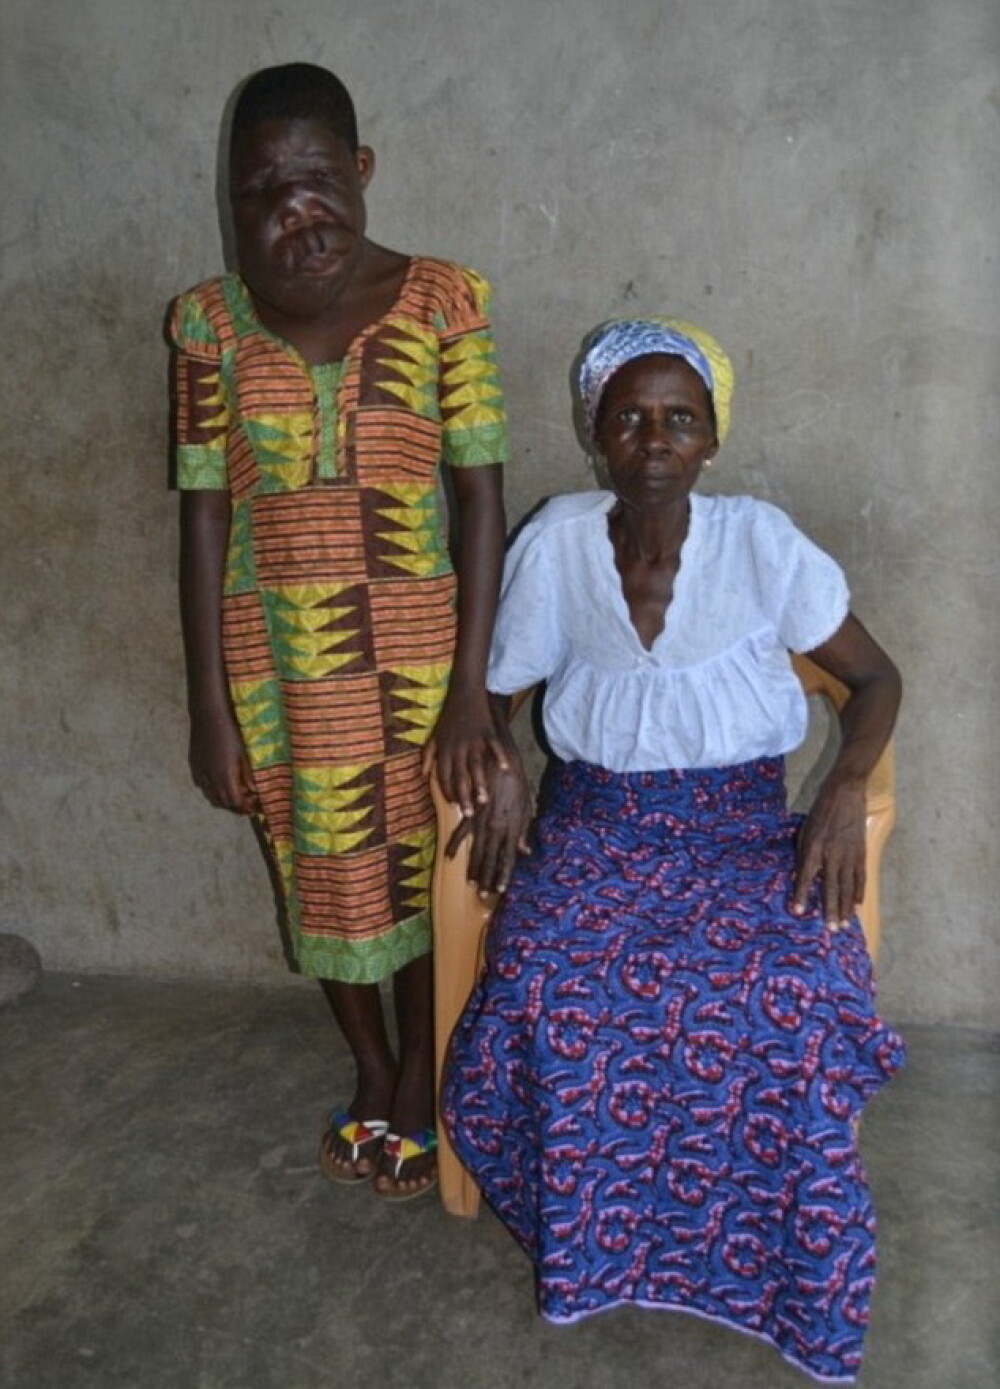 Fetita de 13 ani din Ghana cu o diformitate faciala extrema va fi operata. FOTO - Imaginea 4